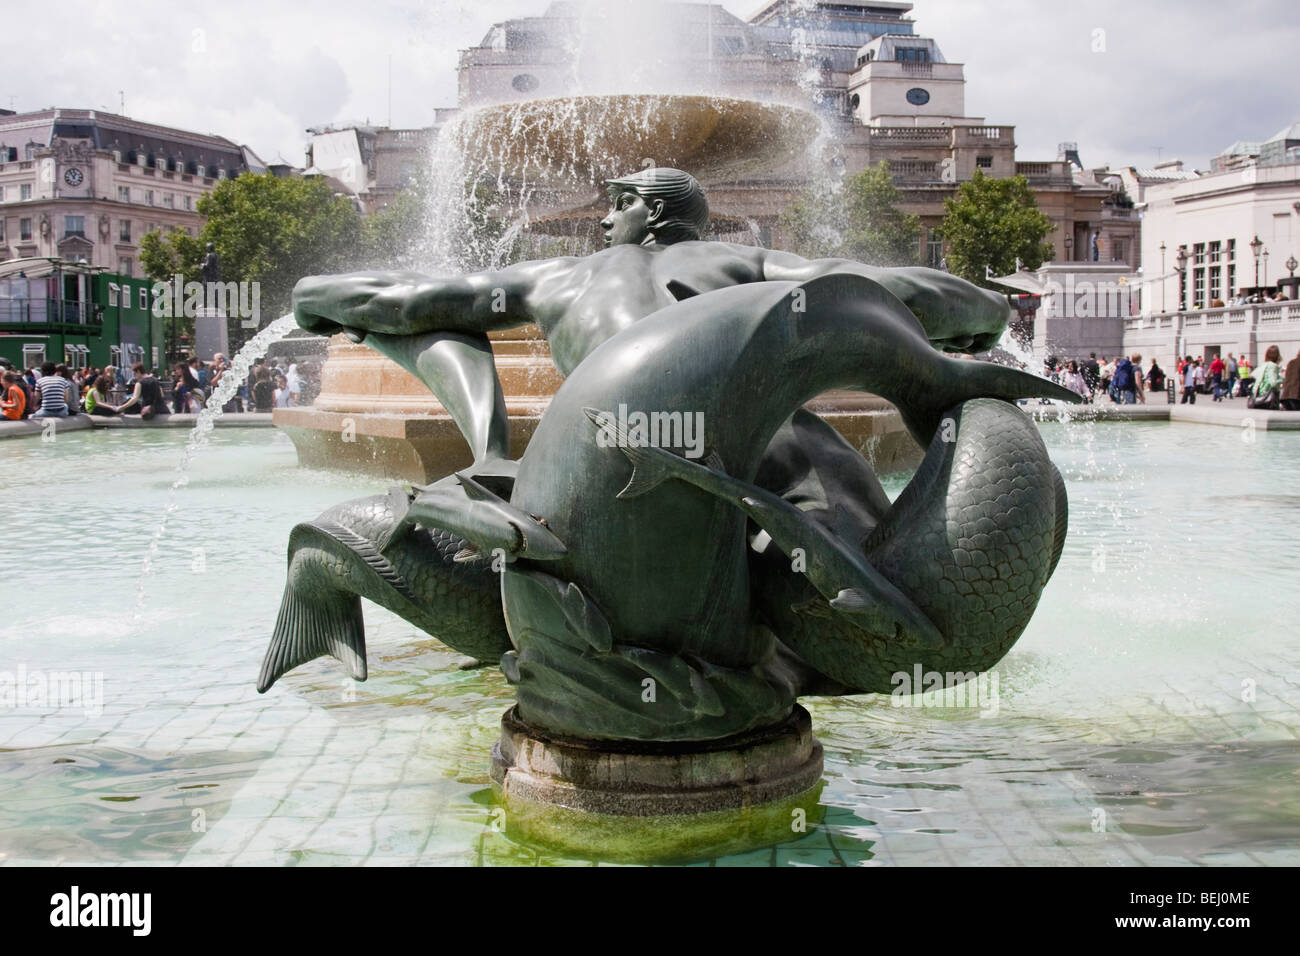 La scultura in bronzo del merman in Trafalgar Square, Londra Inghilterra, con fontana dietro. Preso in estate 2009. Foto Stock